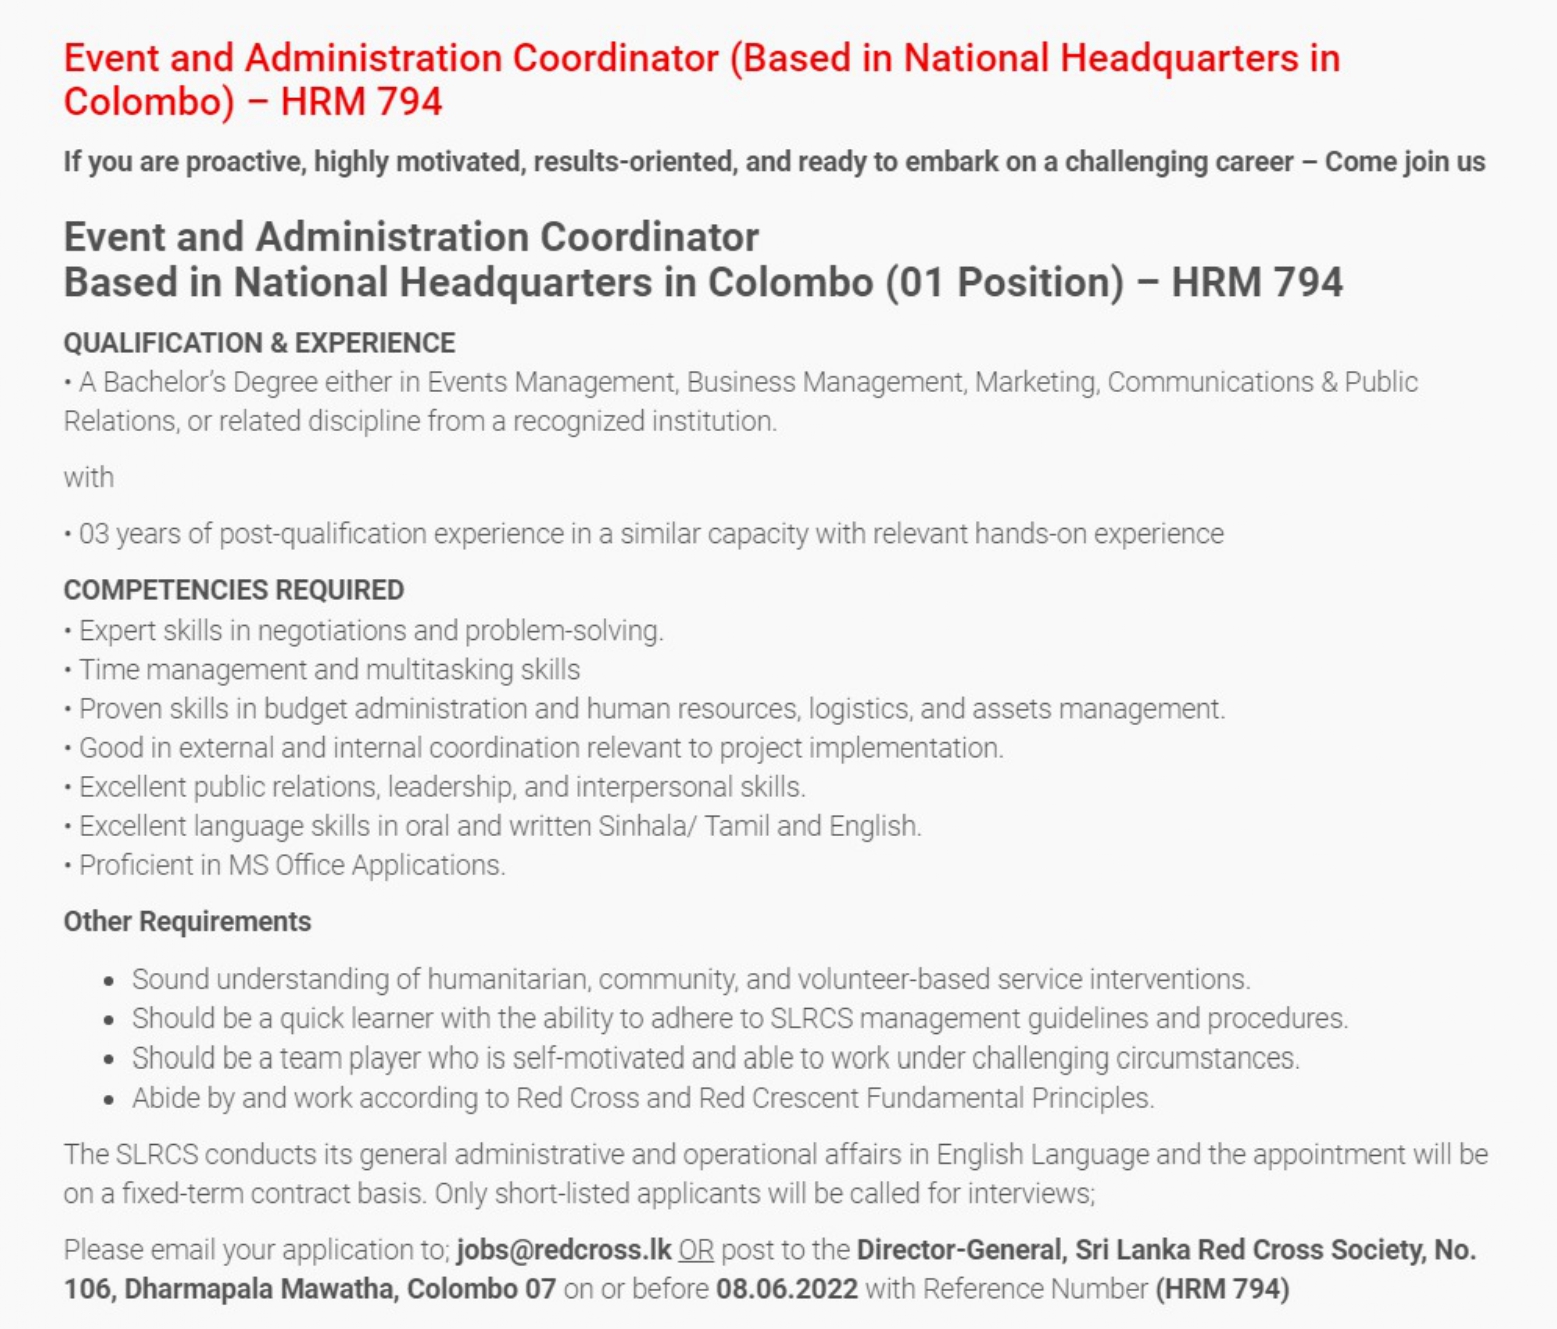 Event and Administration Coordinator Vacancies - Sri Lanka Red Cross Society (SLRCS)